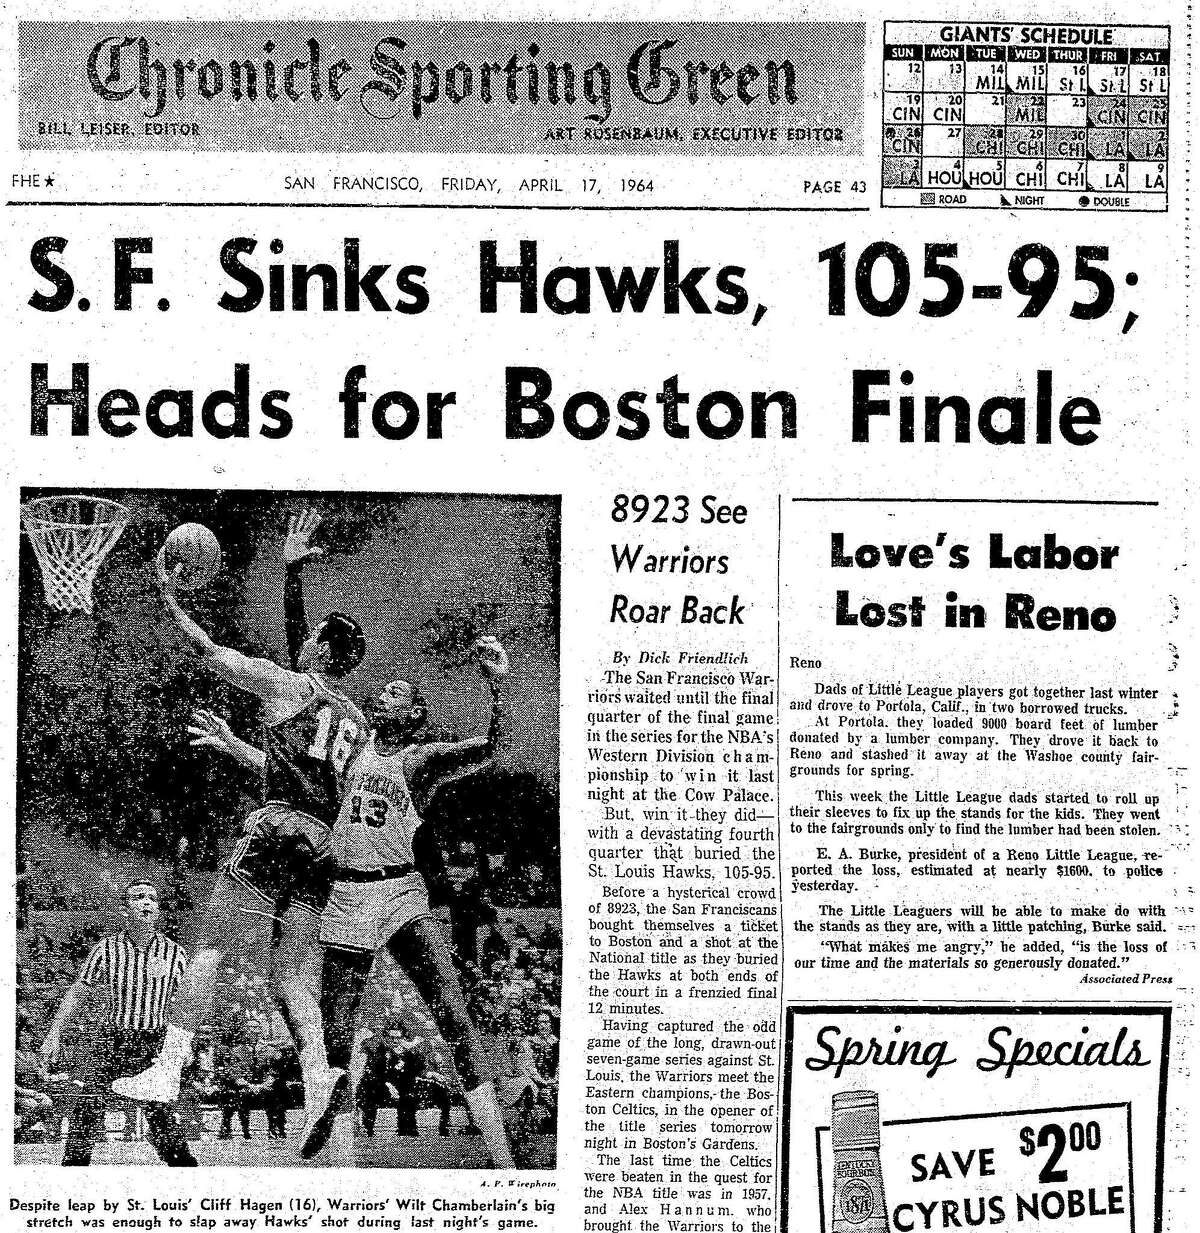 Feb 9 1956 NBA Program St. Louis Hawks at Philadelphia Warriors VGEX